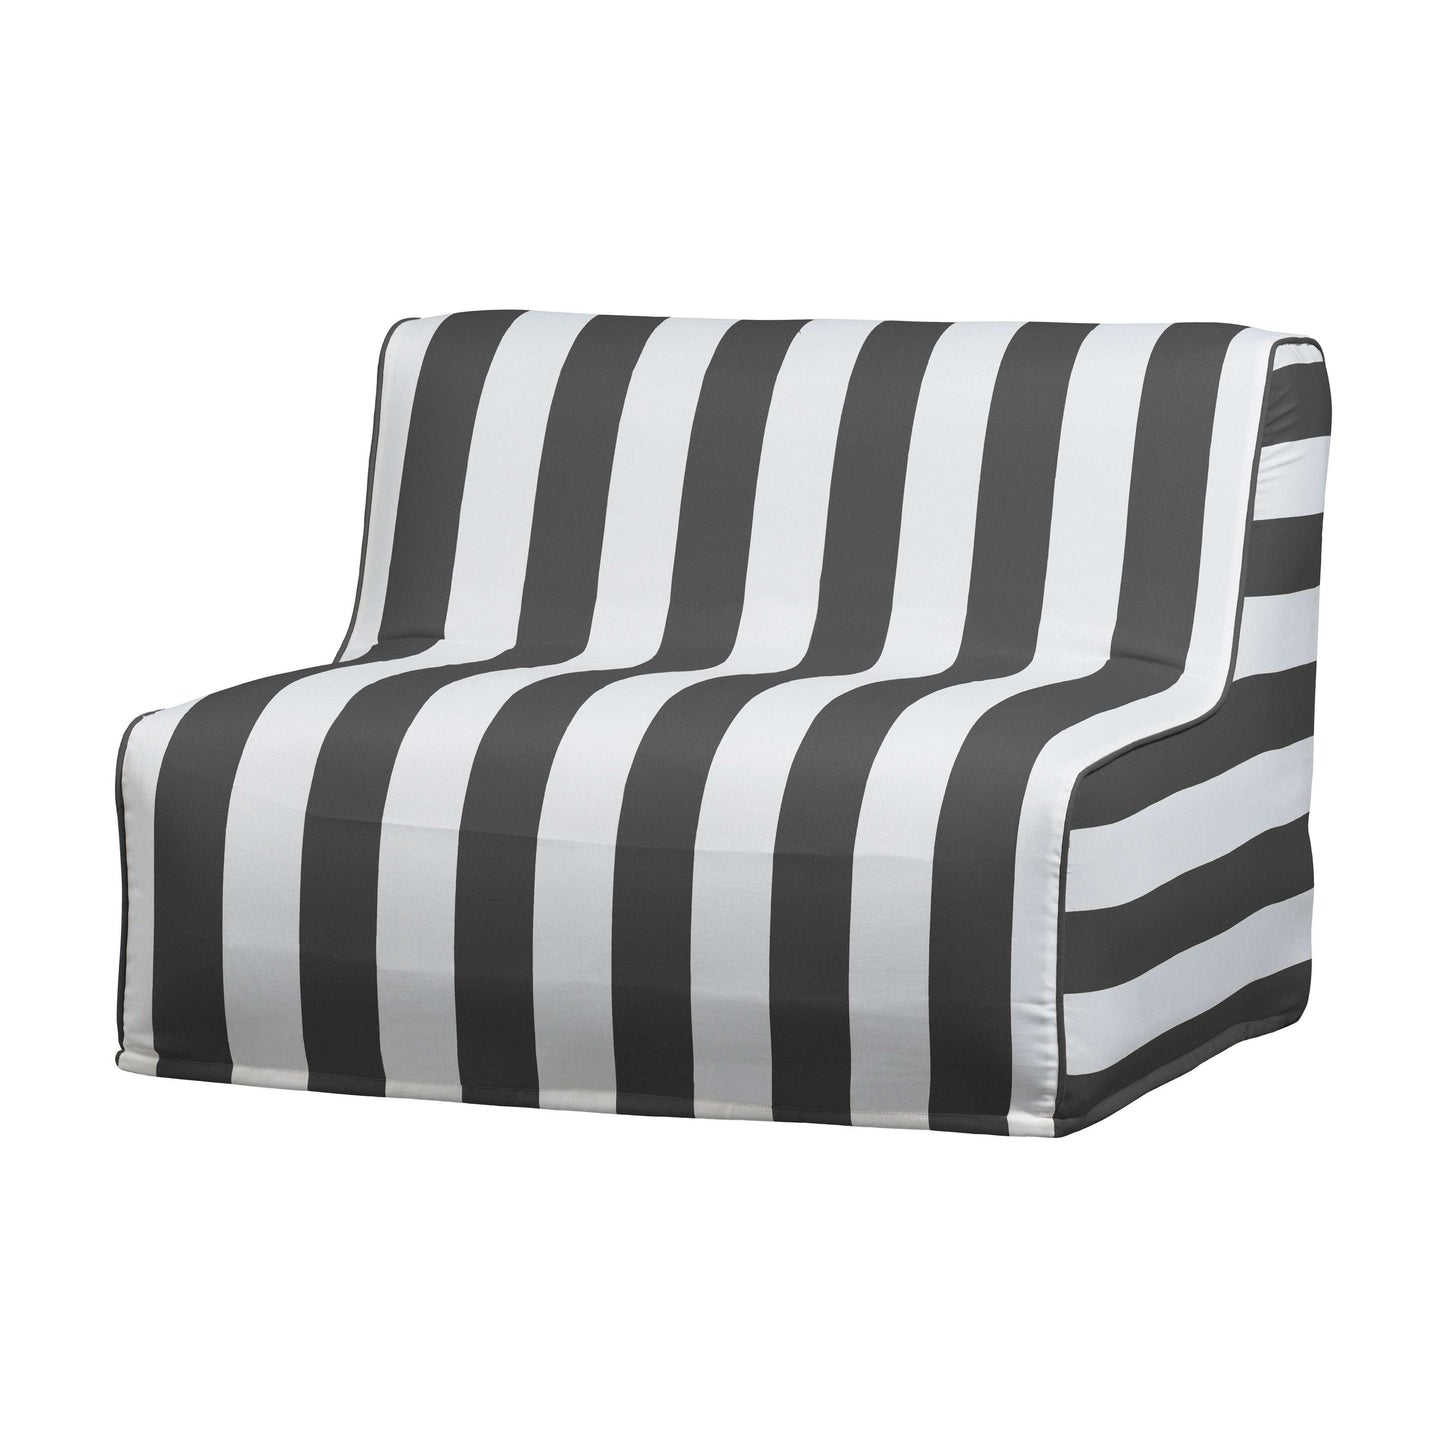 vtwonen Sit on air opblaasbare fauteuil black/white